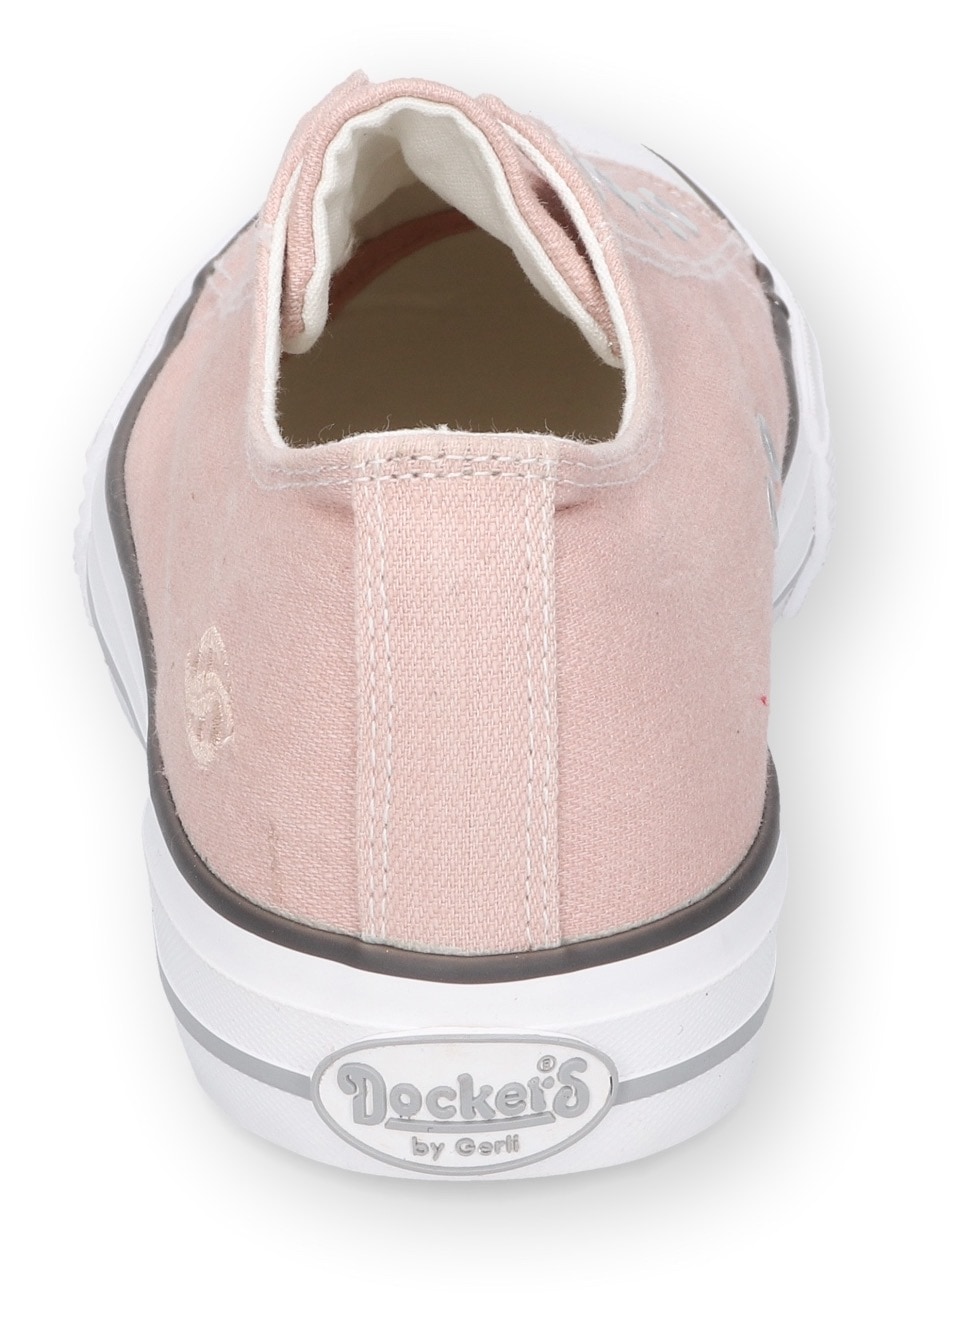 Dockers mit Sneaker, für bei Imwalking Damen Gerli Slip-On Zierösen by